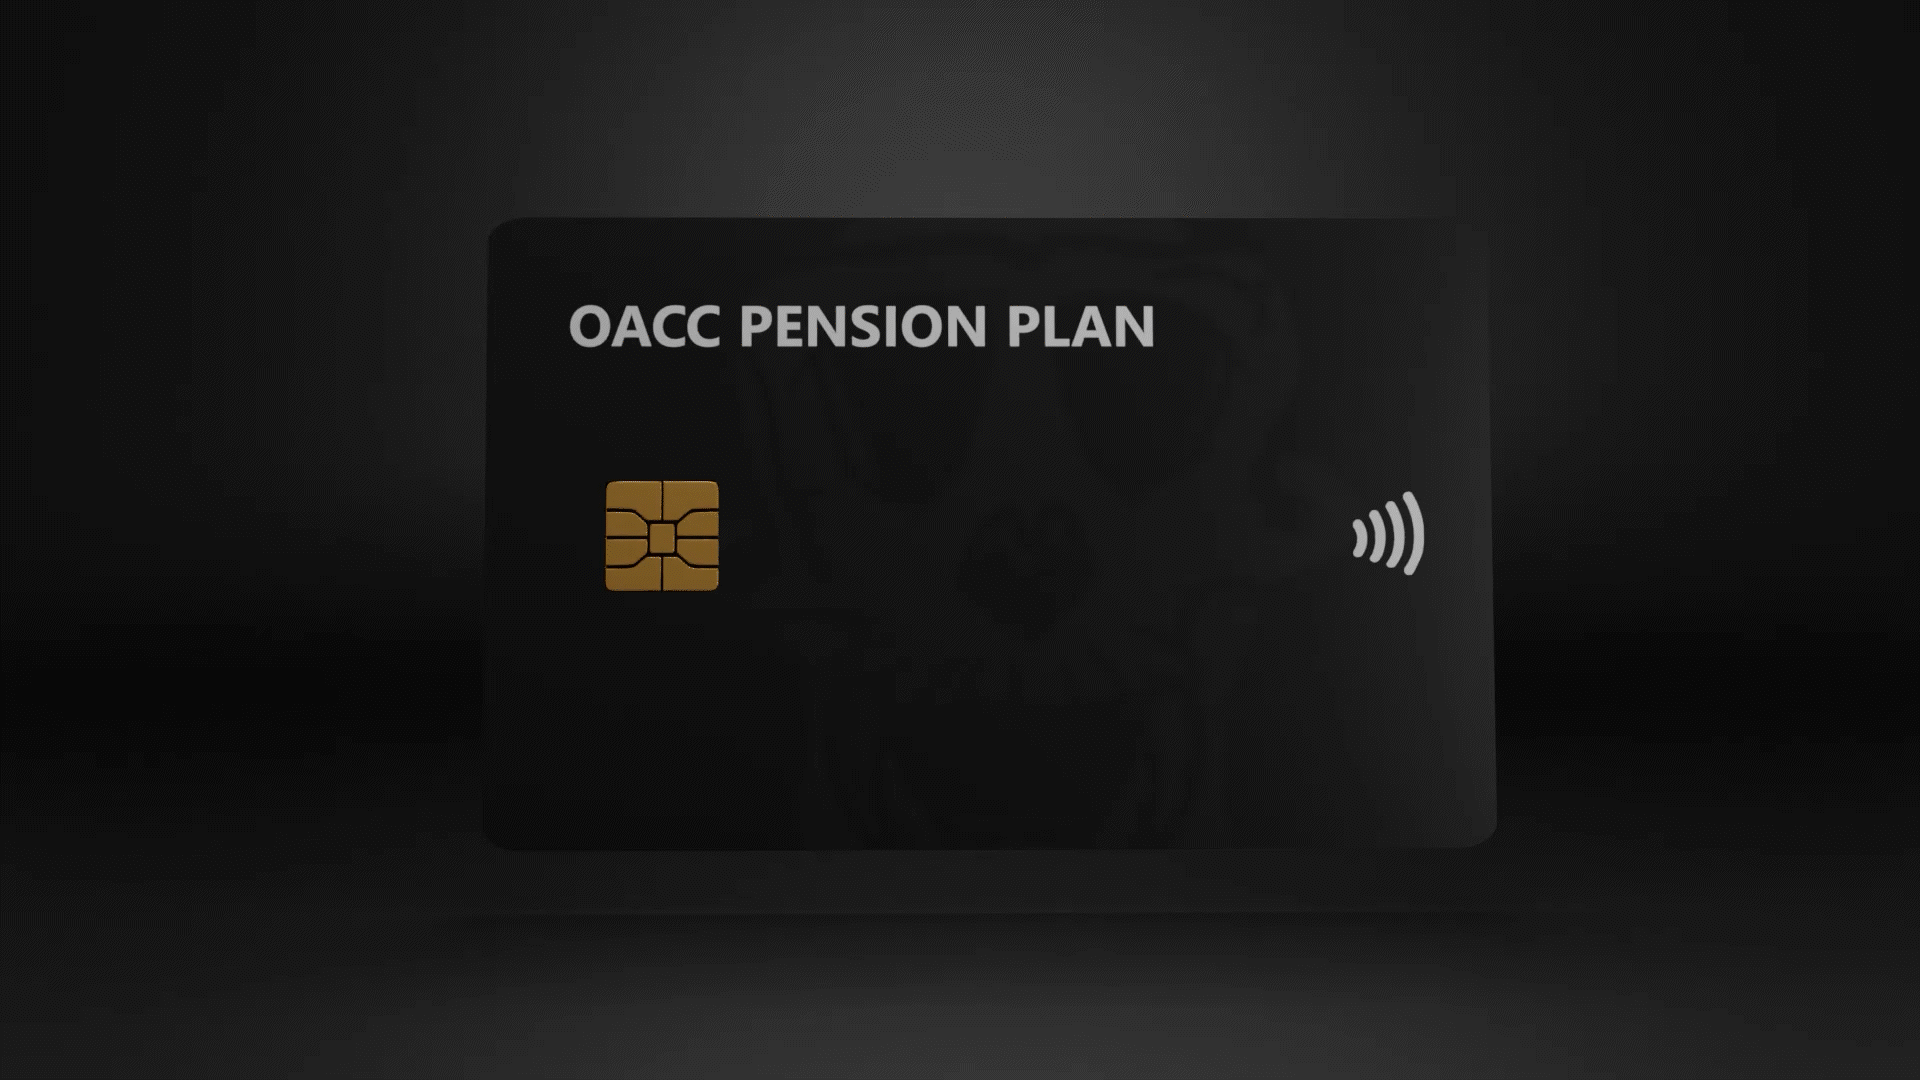 OACC Pension Plan (Obsidian)